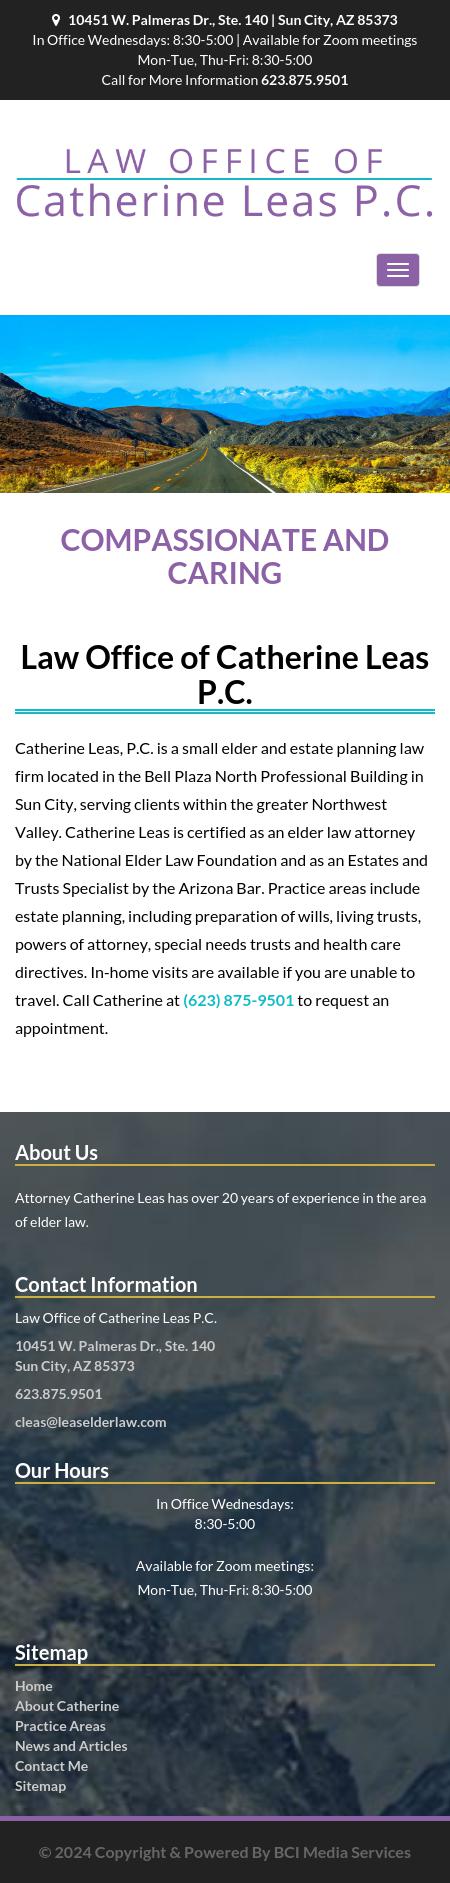 The Law Office of Catherine Leas, P.C. - Sun City AZ Lawyers